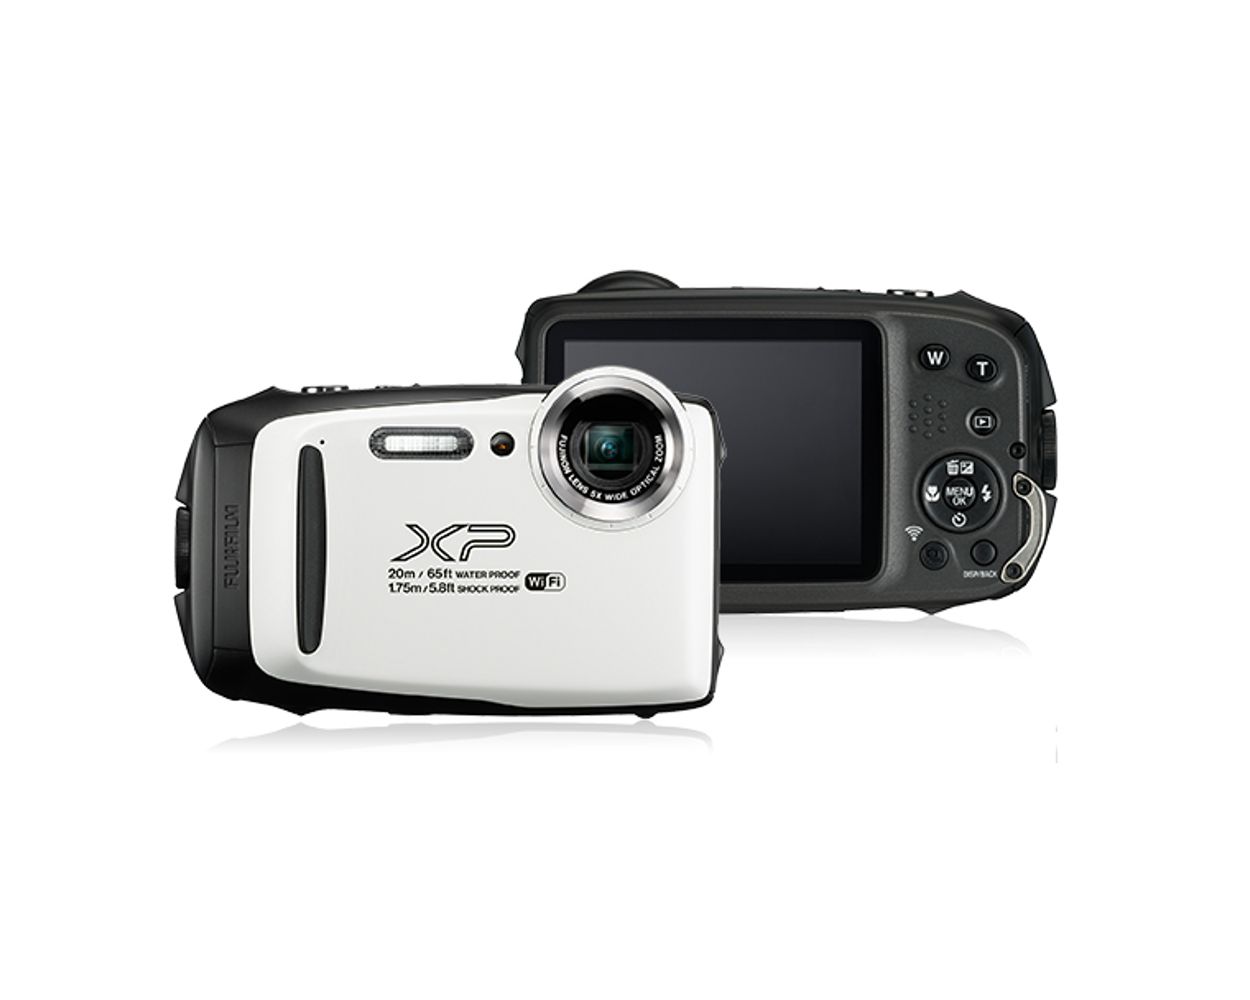 Fujifilm FinePix XP130 waterproof camera